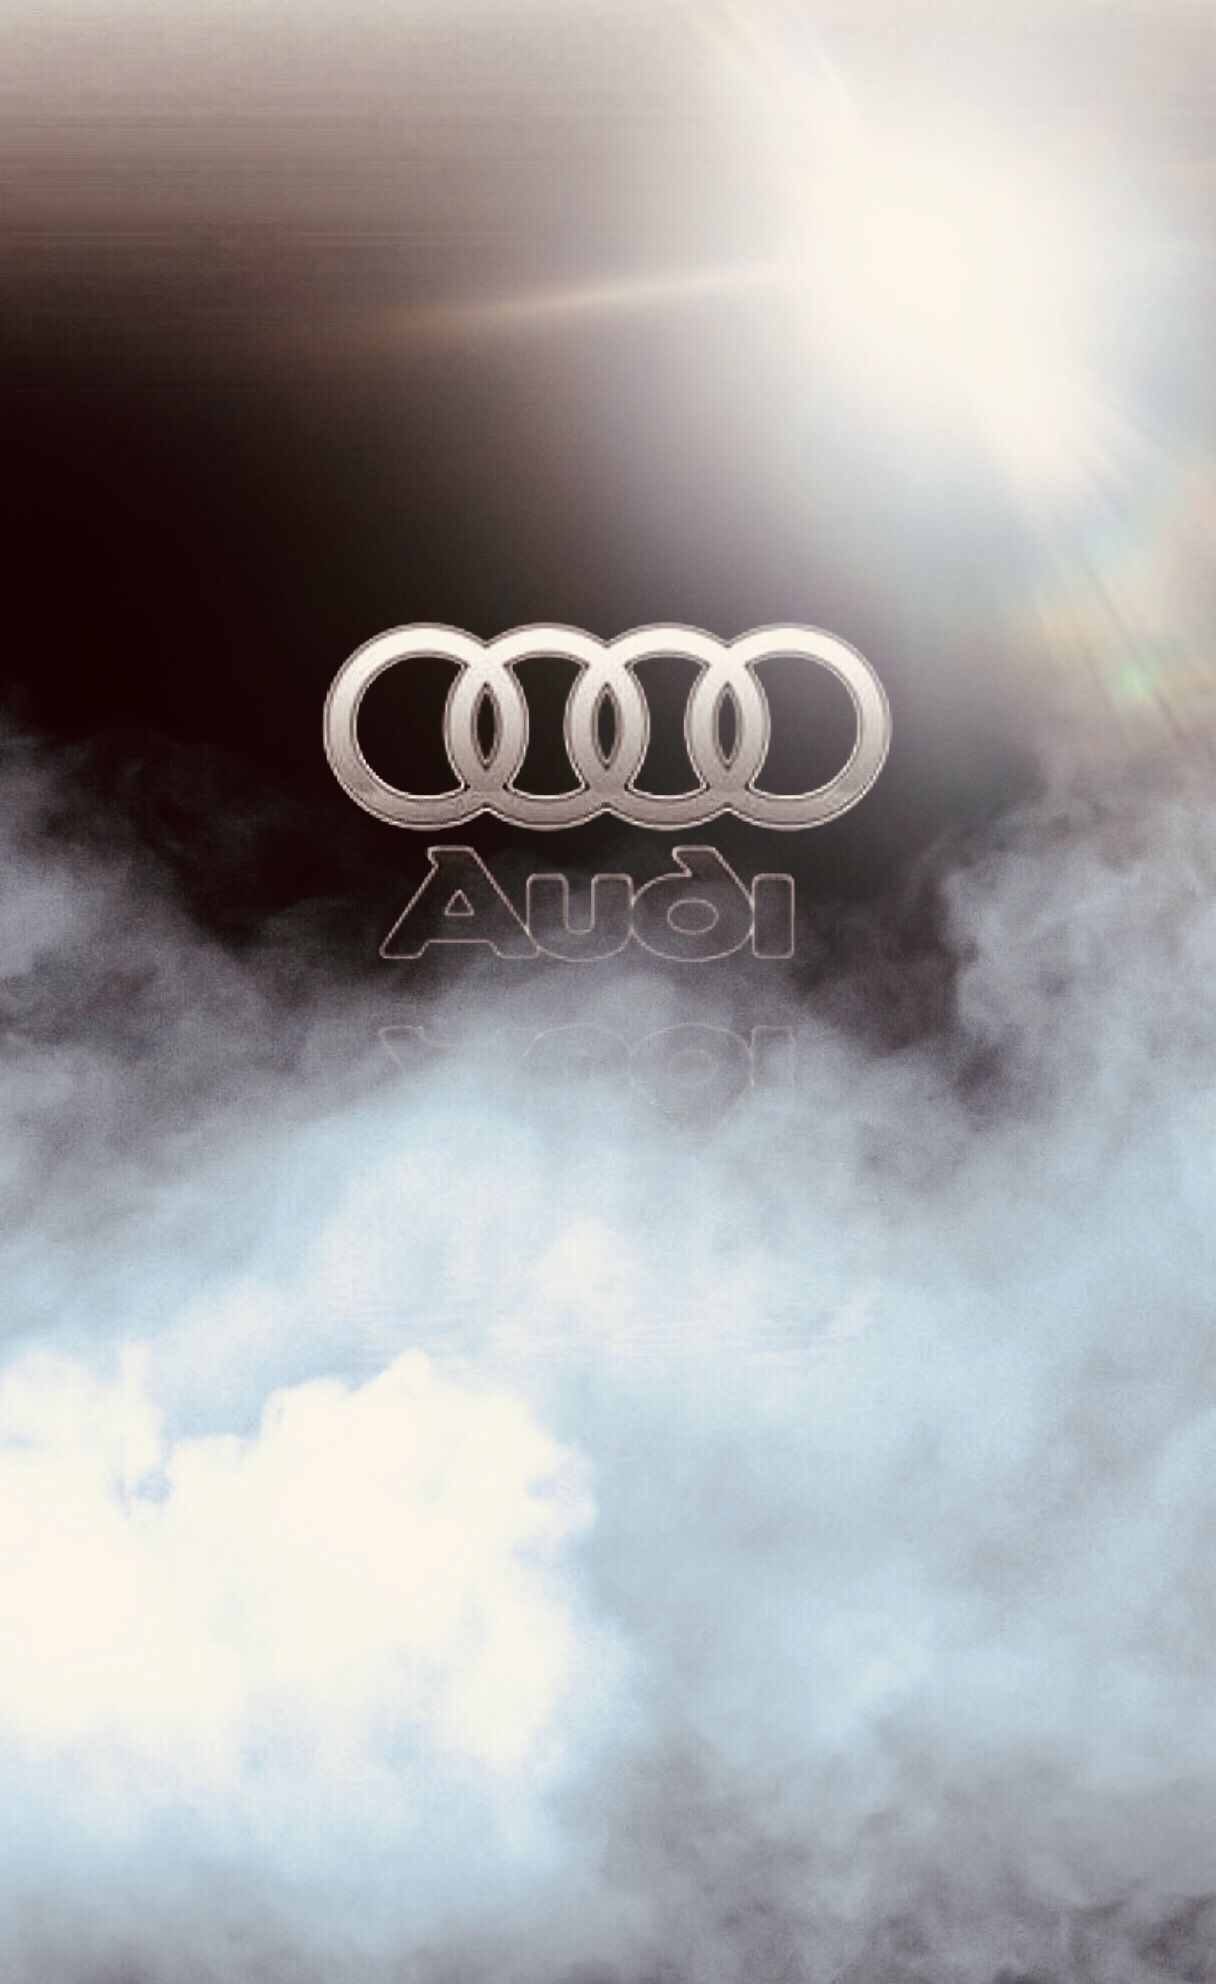 Audi Hintergrundbild 1216x1984. Audi Wallpaper IPhone. IPhone Wallpaper, Car Wallpaper, Wallpaper